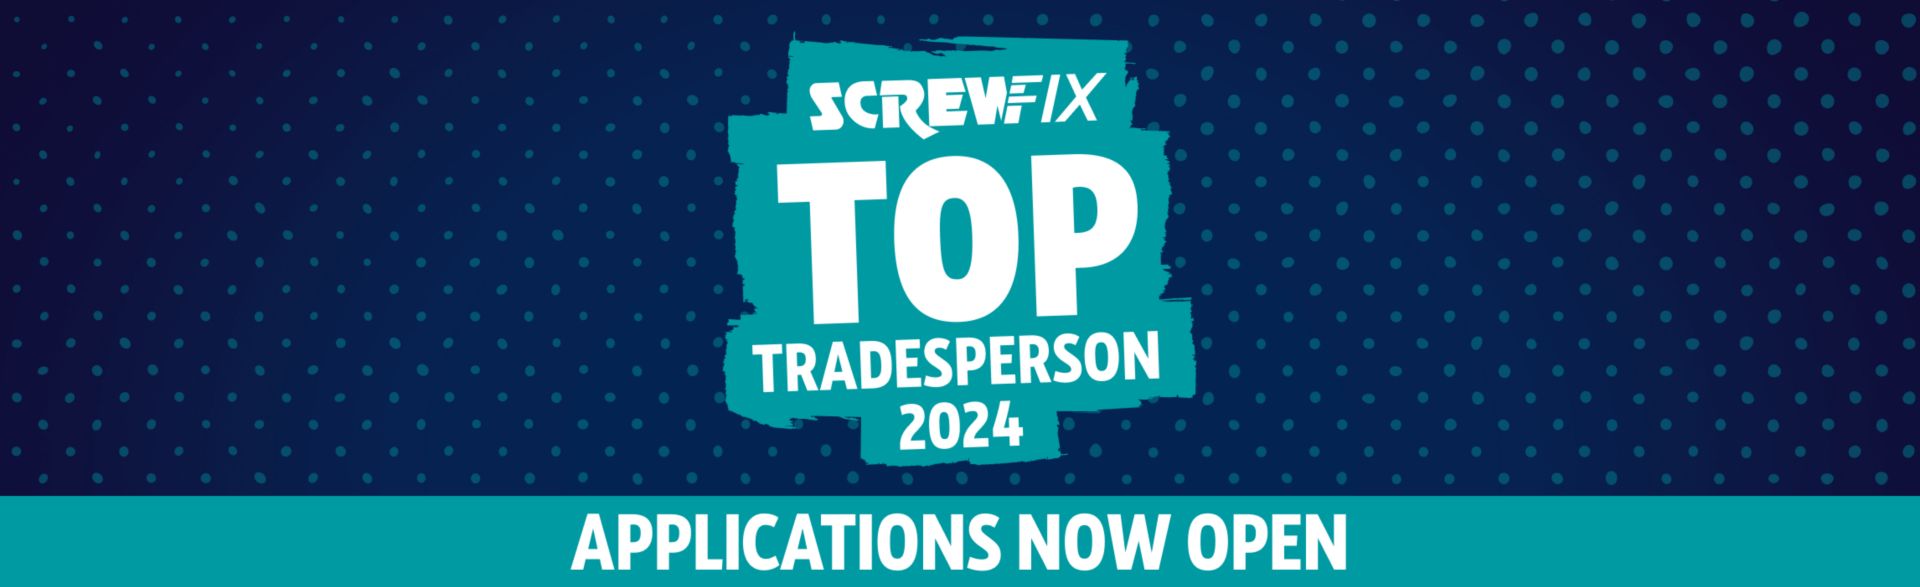 Screwfix Top Tradesperson 2024 - Applications Now Open